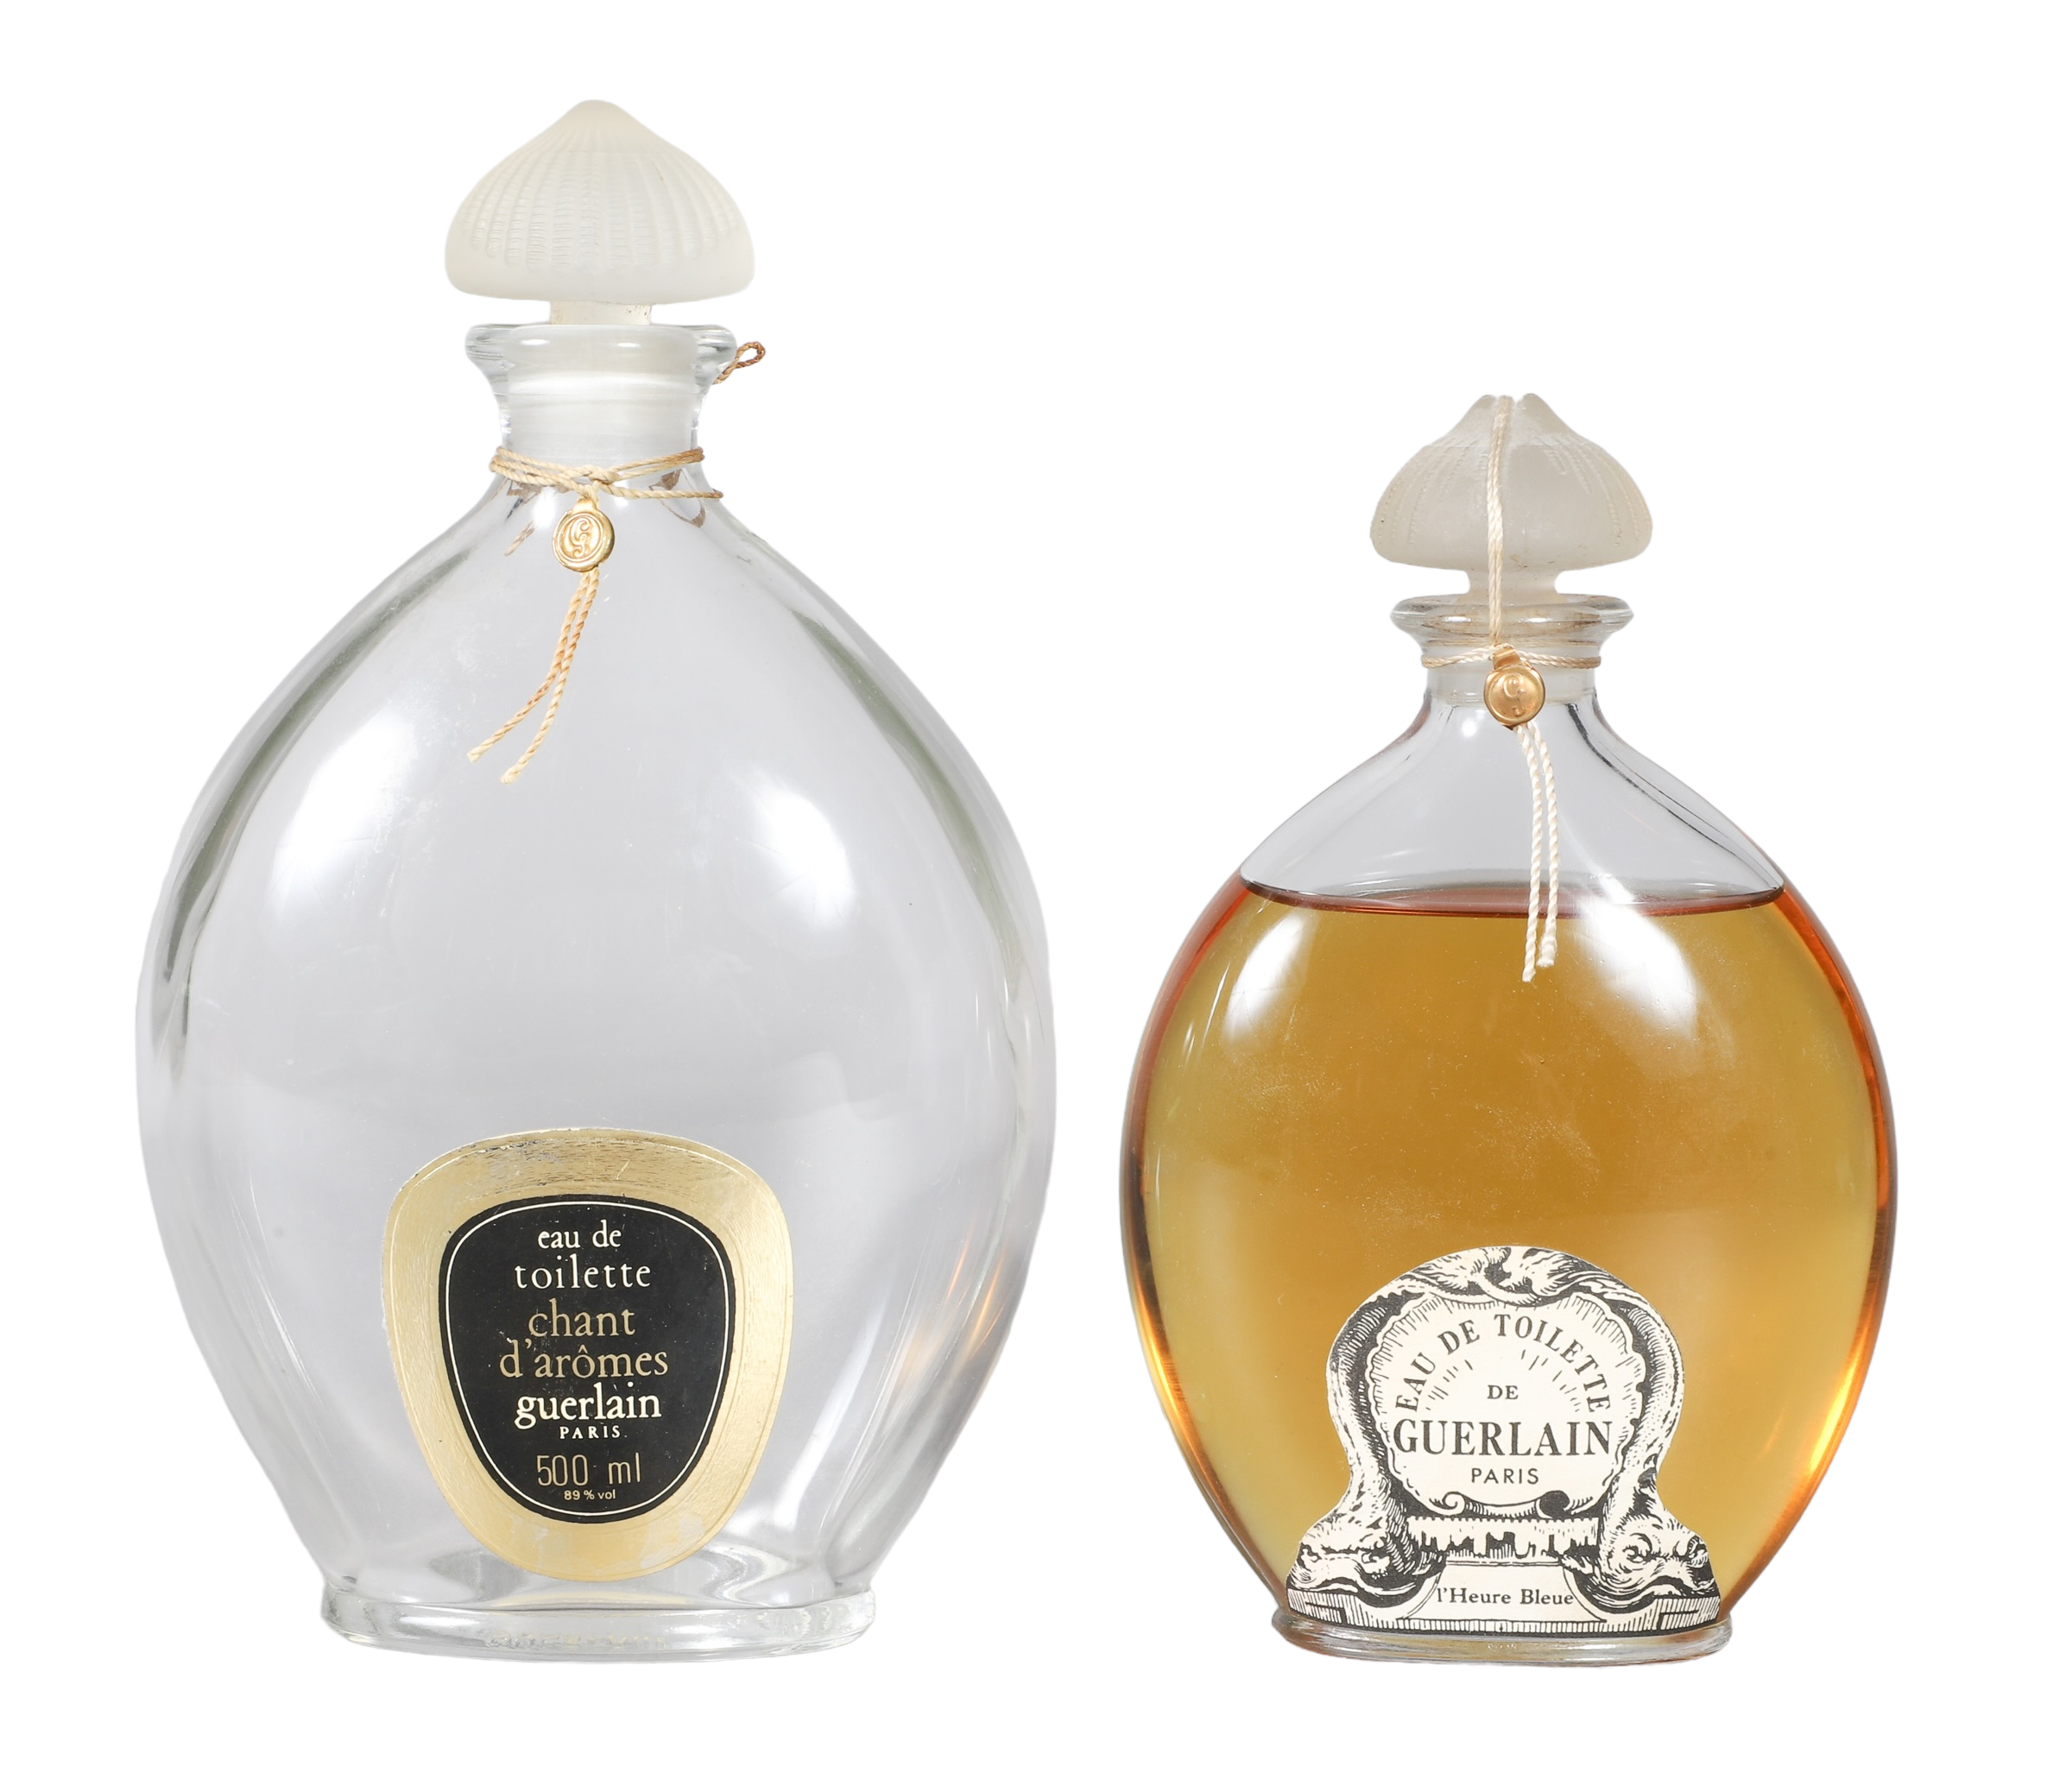  2 Guerlain perfume bottles to 317eaa